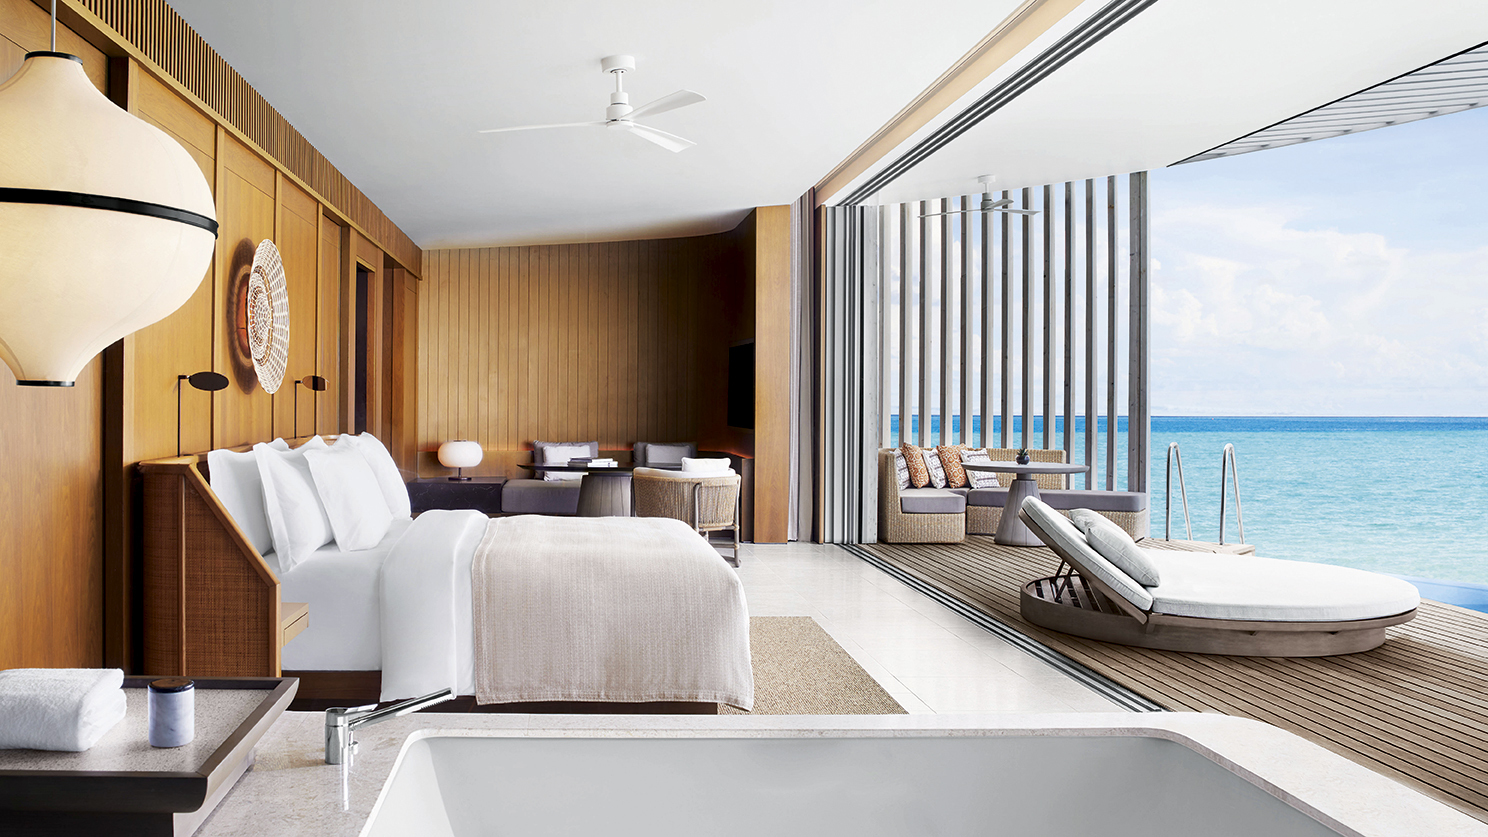 The Ritz Carlton Maldives Fari Islands Ocean Pool Villa Bedroom 1